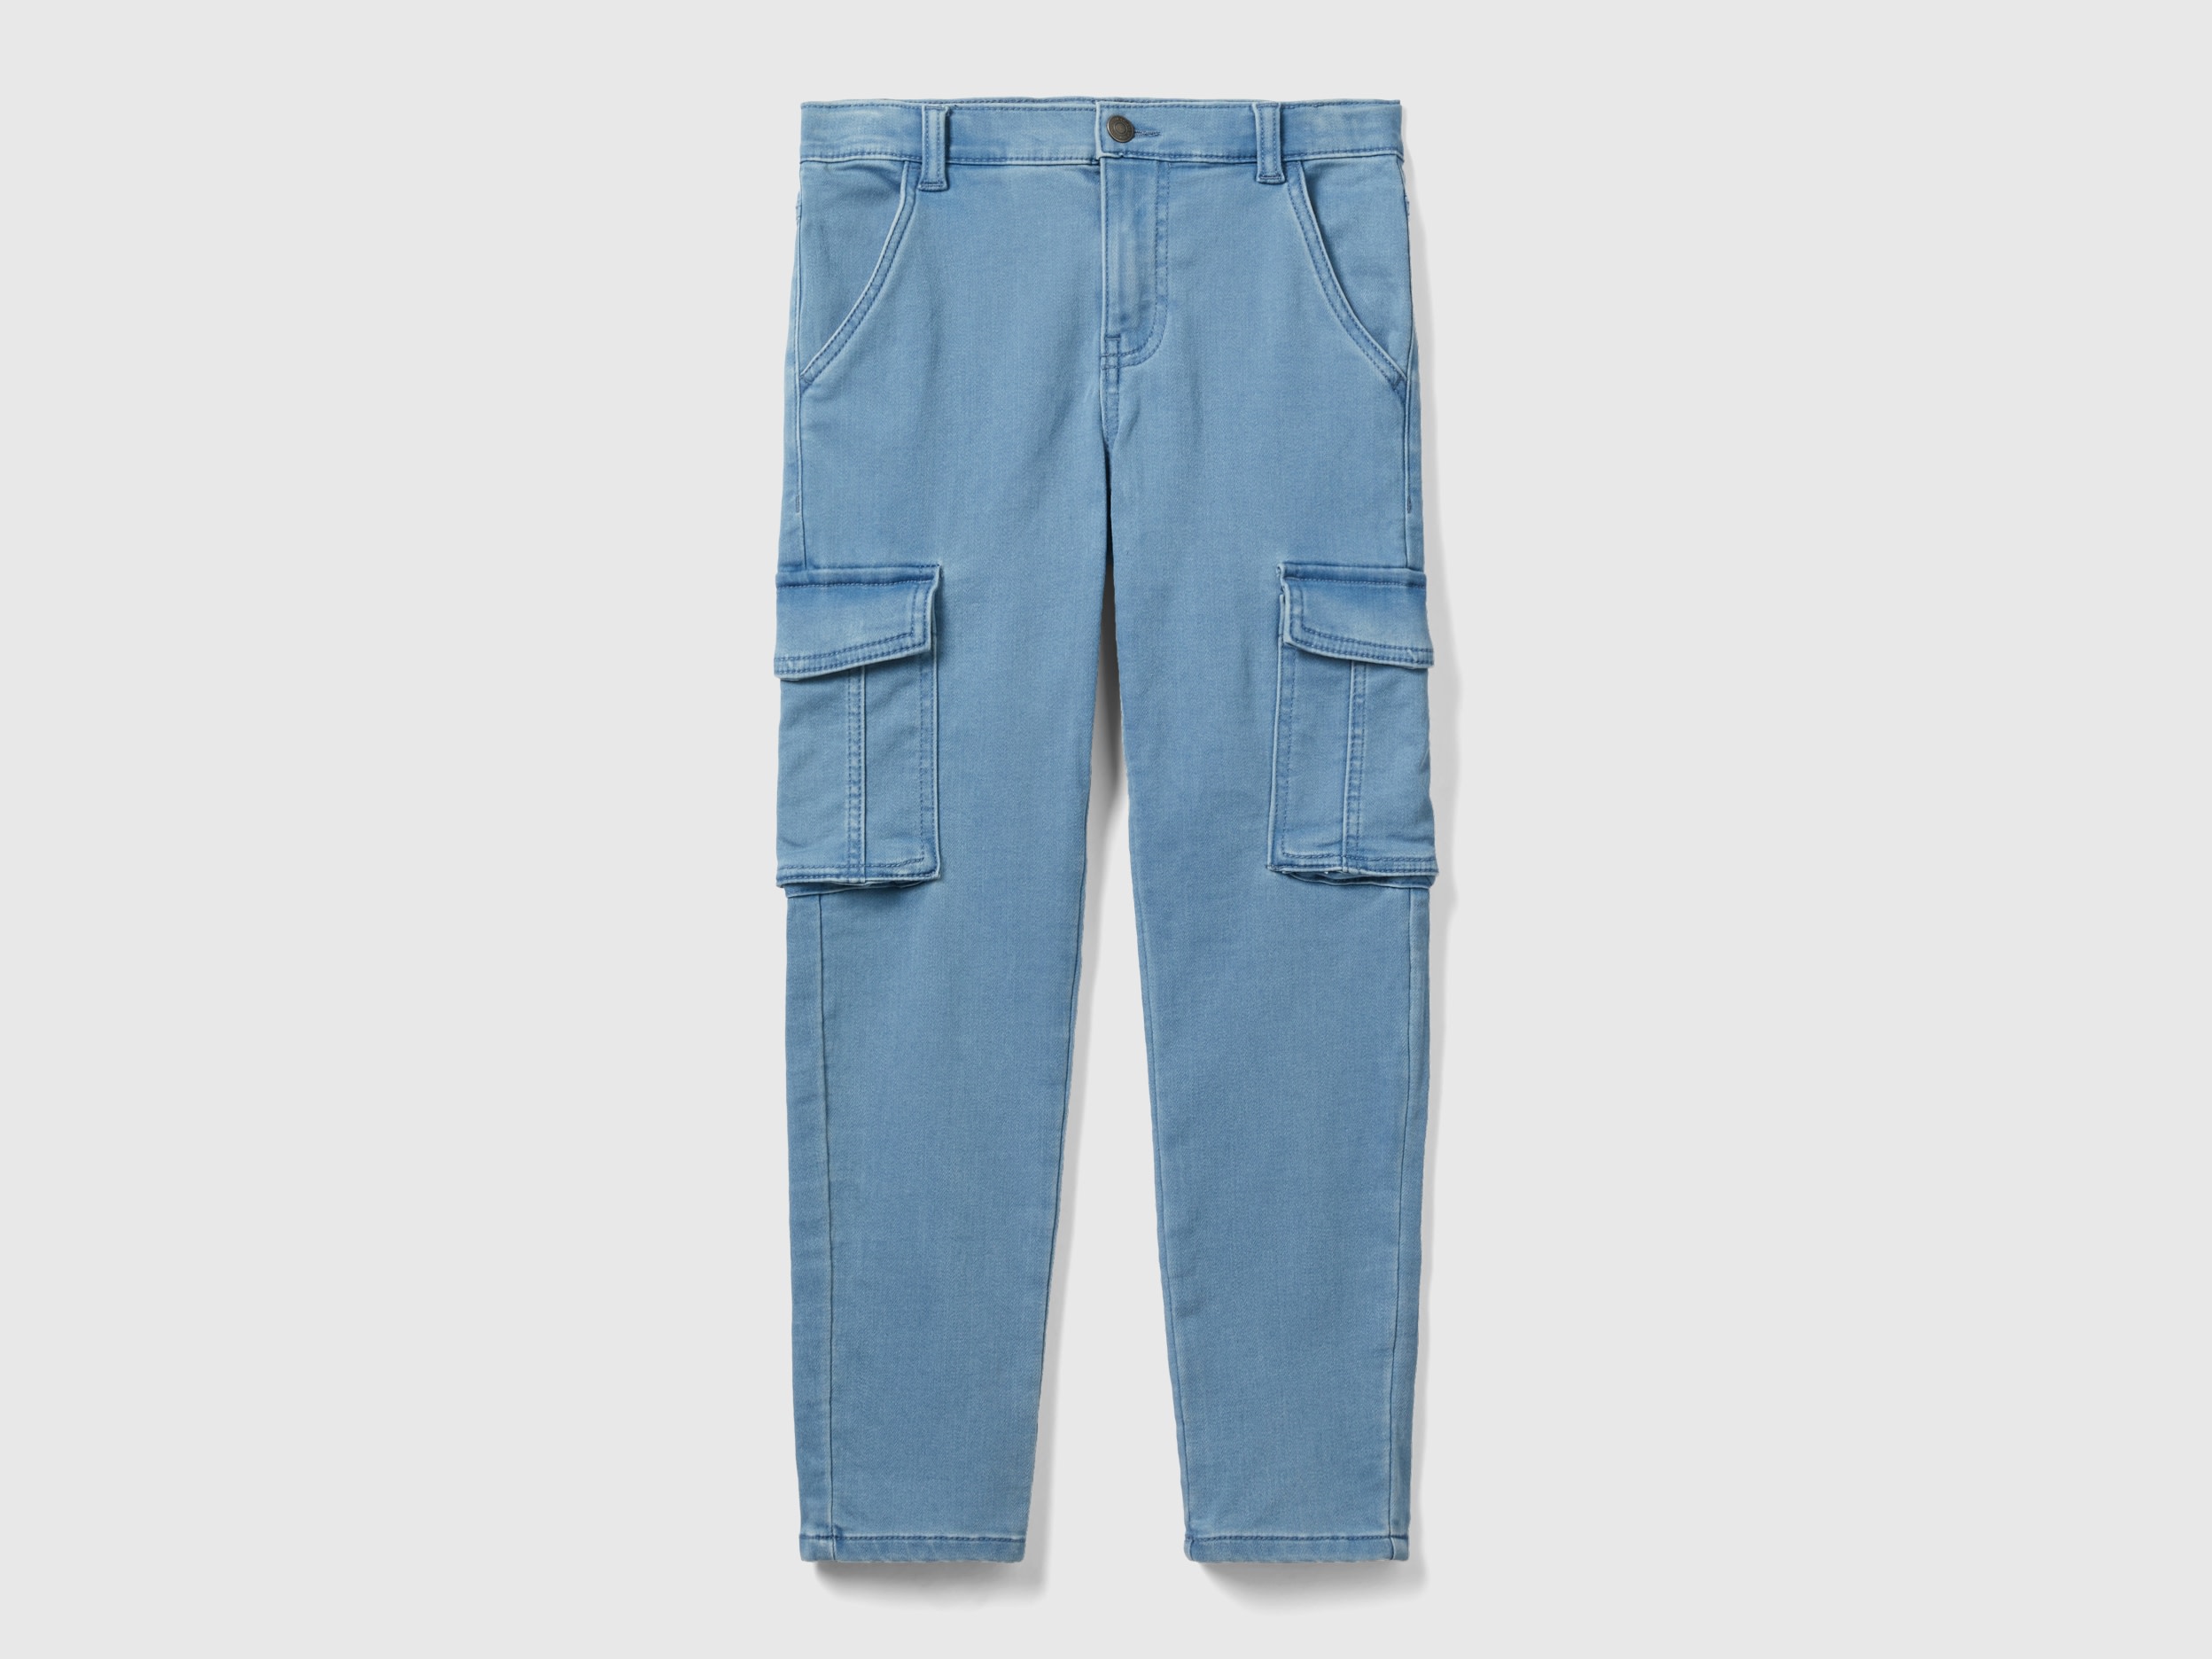 Benetton, Slim Fit Jeans With Pockets, size 2XL, Light Blue, Kids